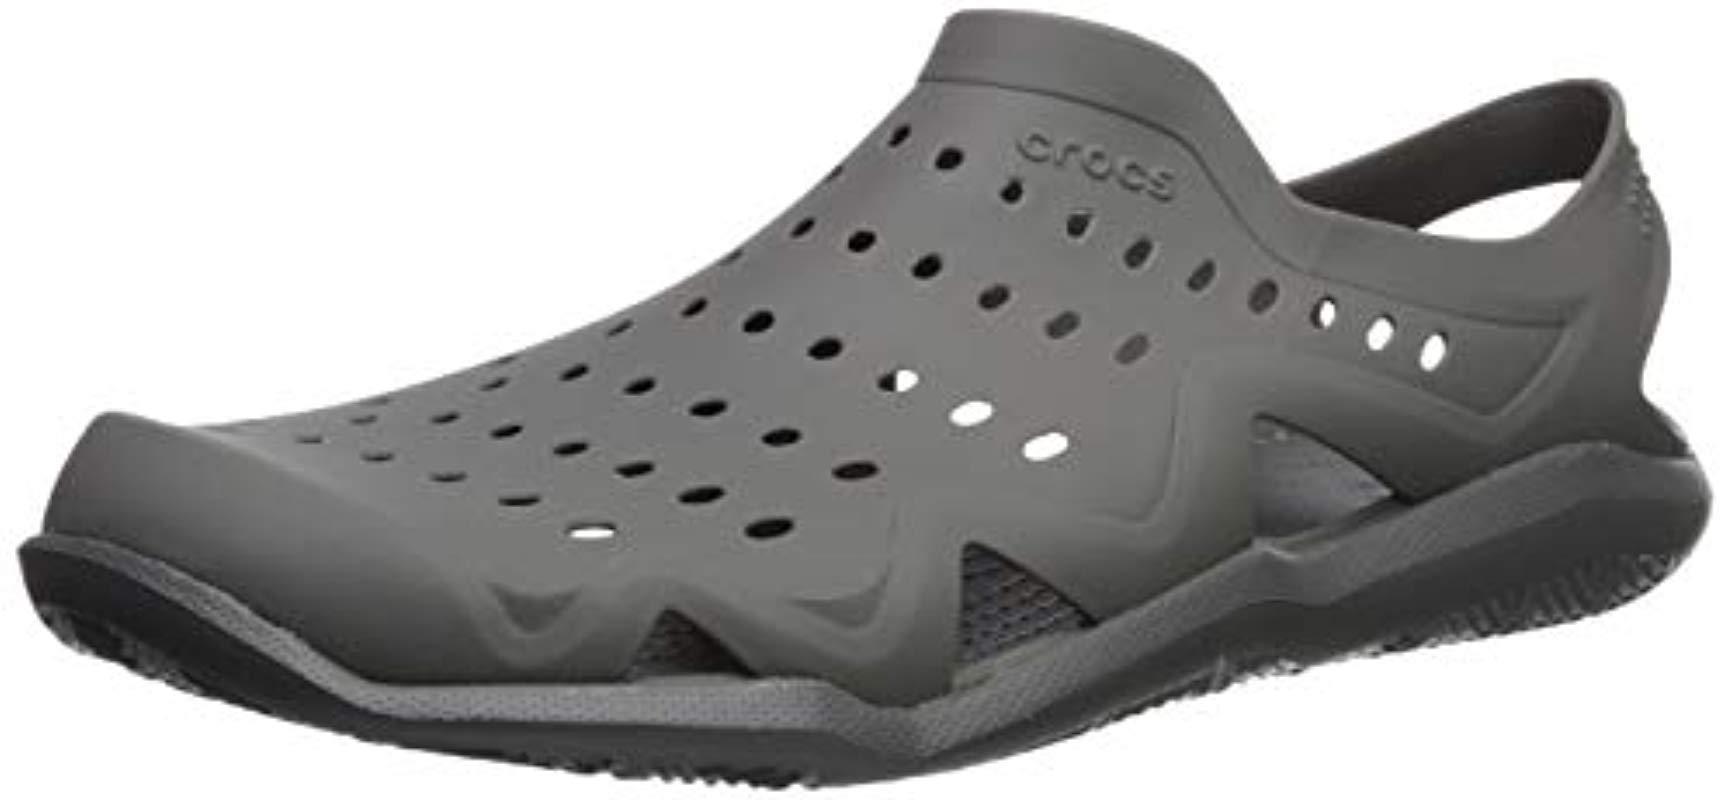 crocs swiftwater grey